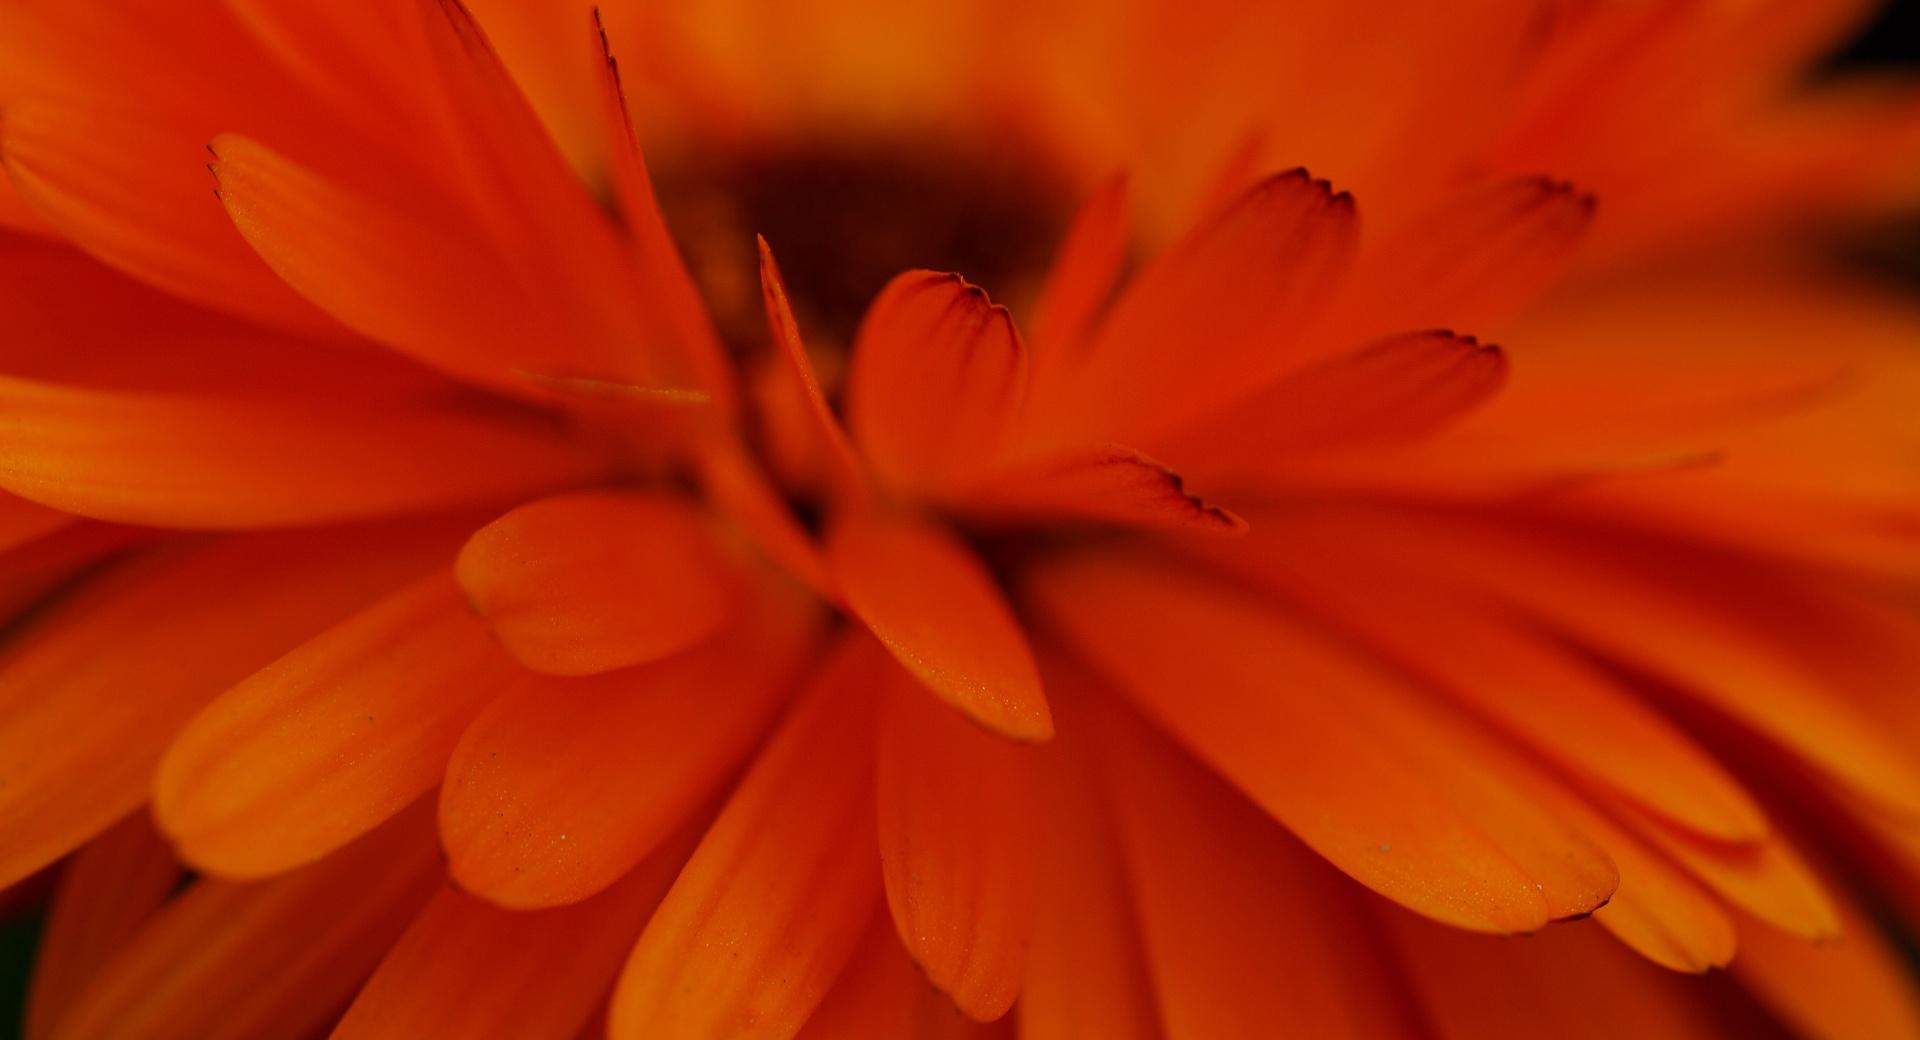 Orange Flower Focus wallpapers HD quality